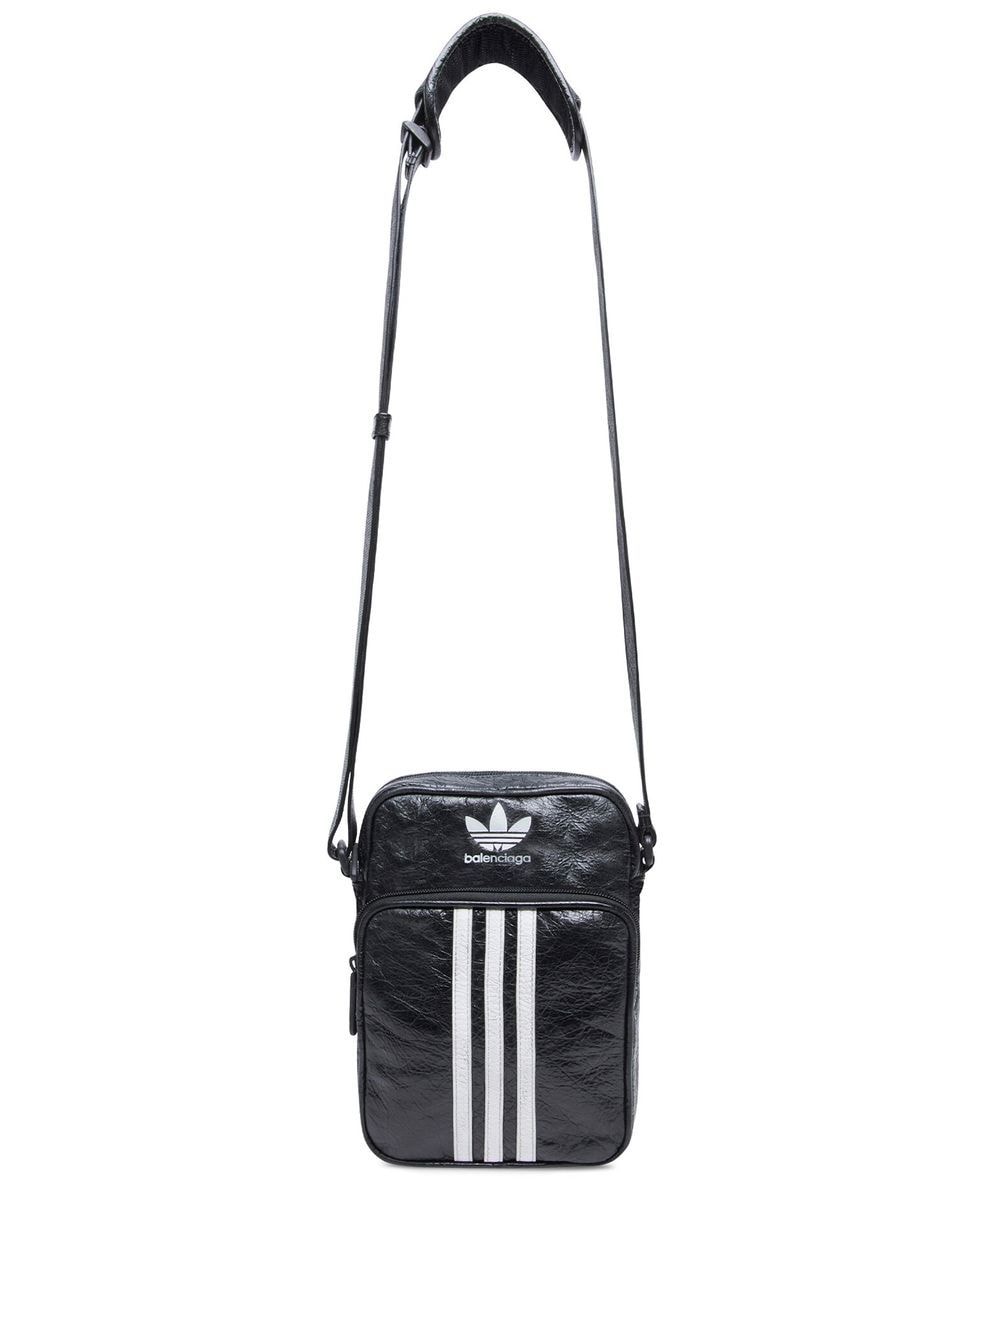 Balenciaga x adidas Trefoil messenger bag - Black